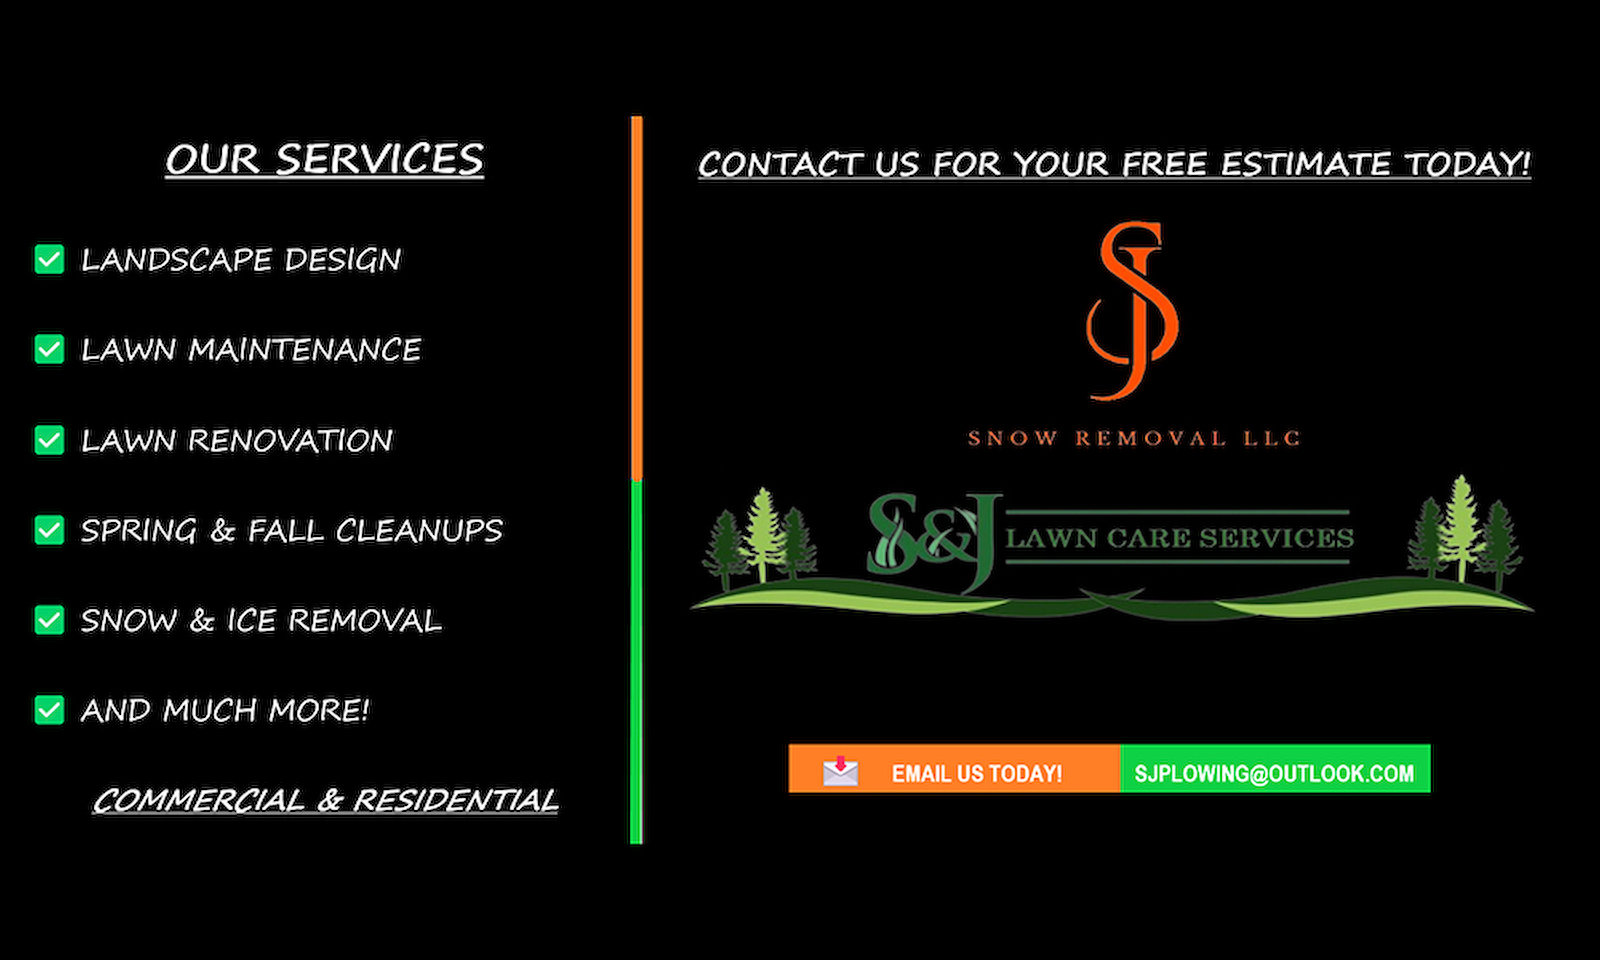 S&J Lawn Care/Snow Removal LLC